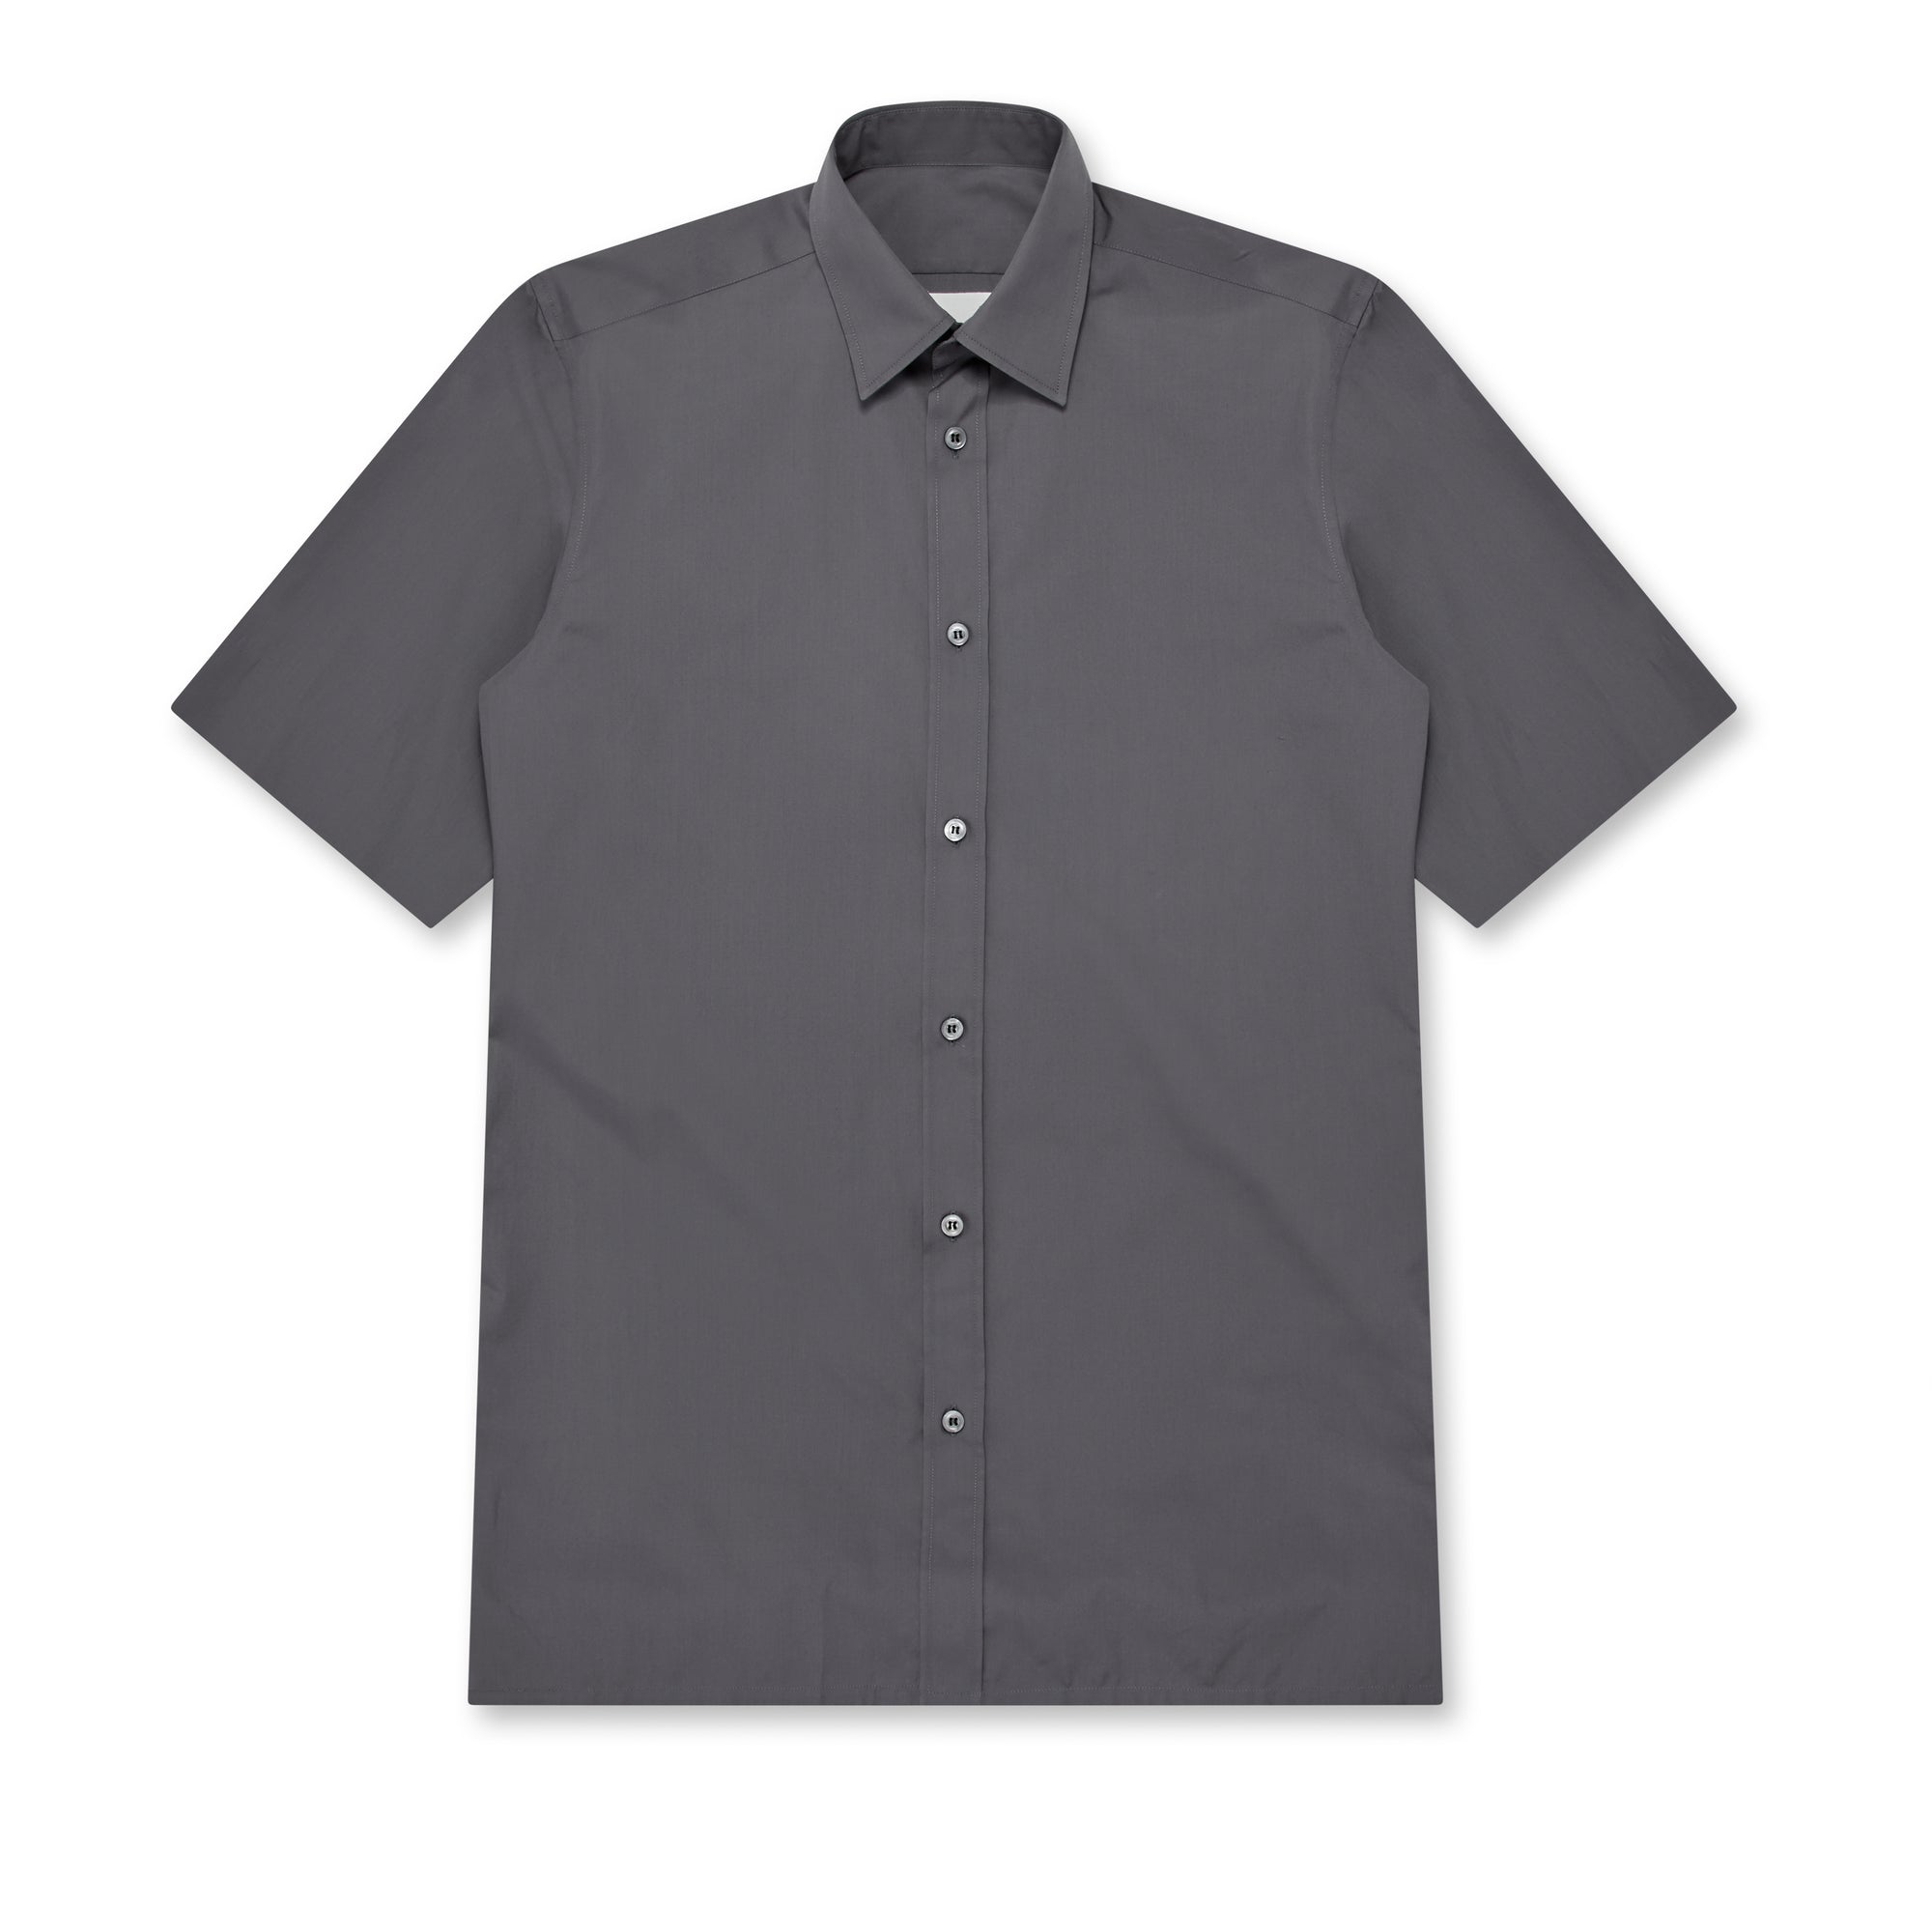 Maison Margiela - Men’s Short-Sleeved Shirt - (Dark Grey) view 1